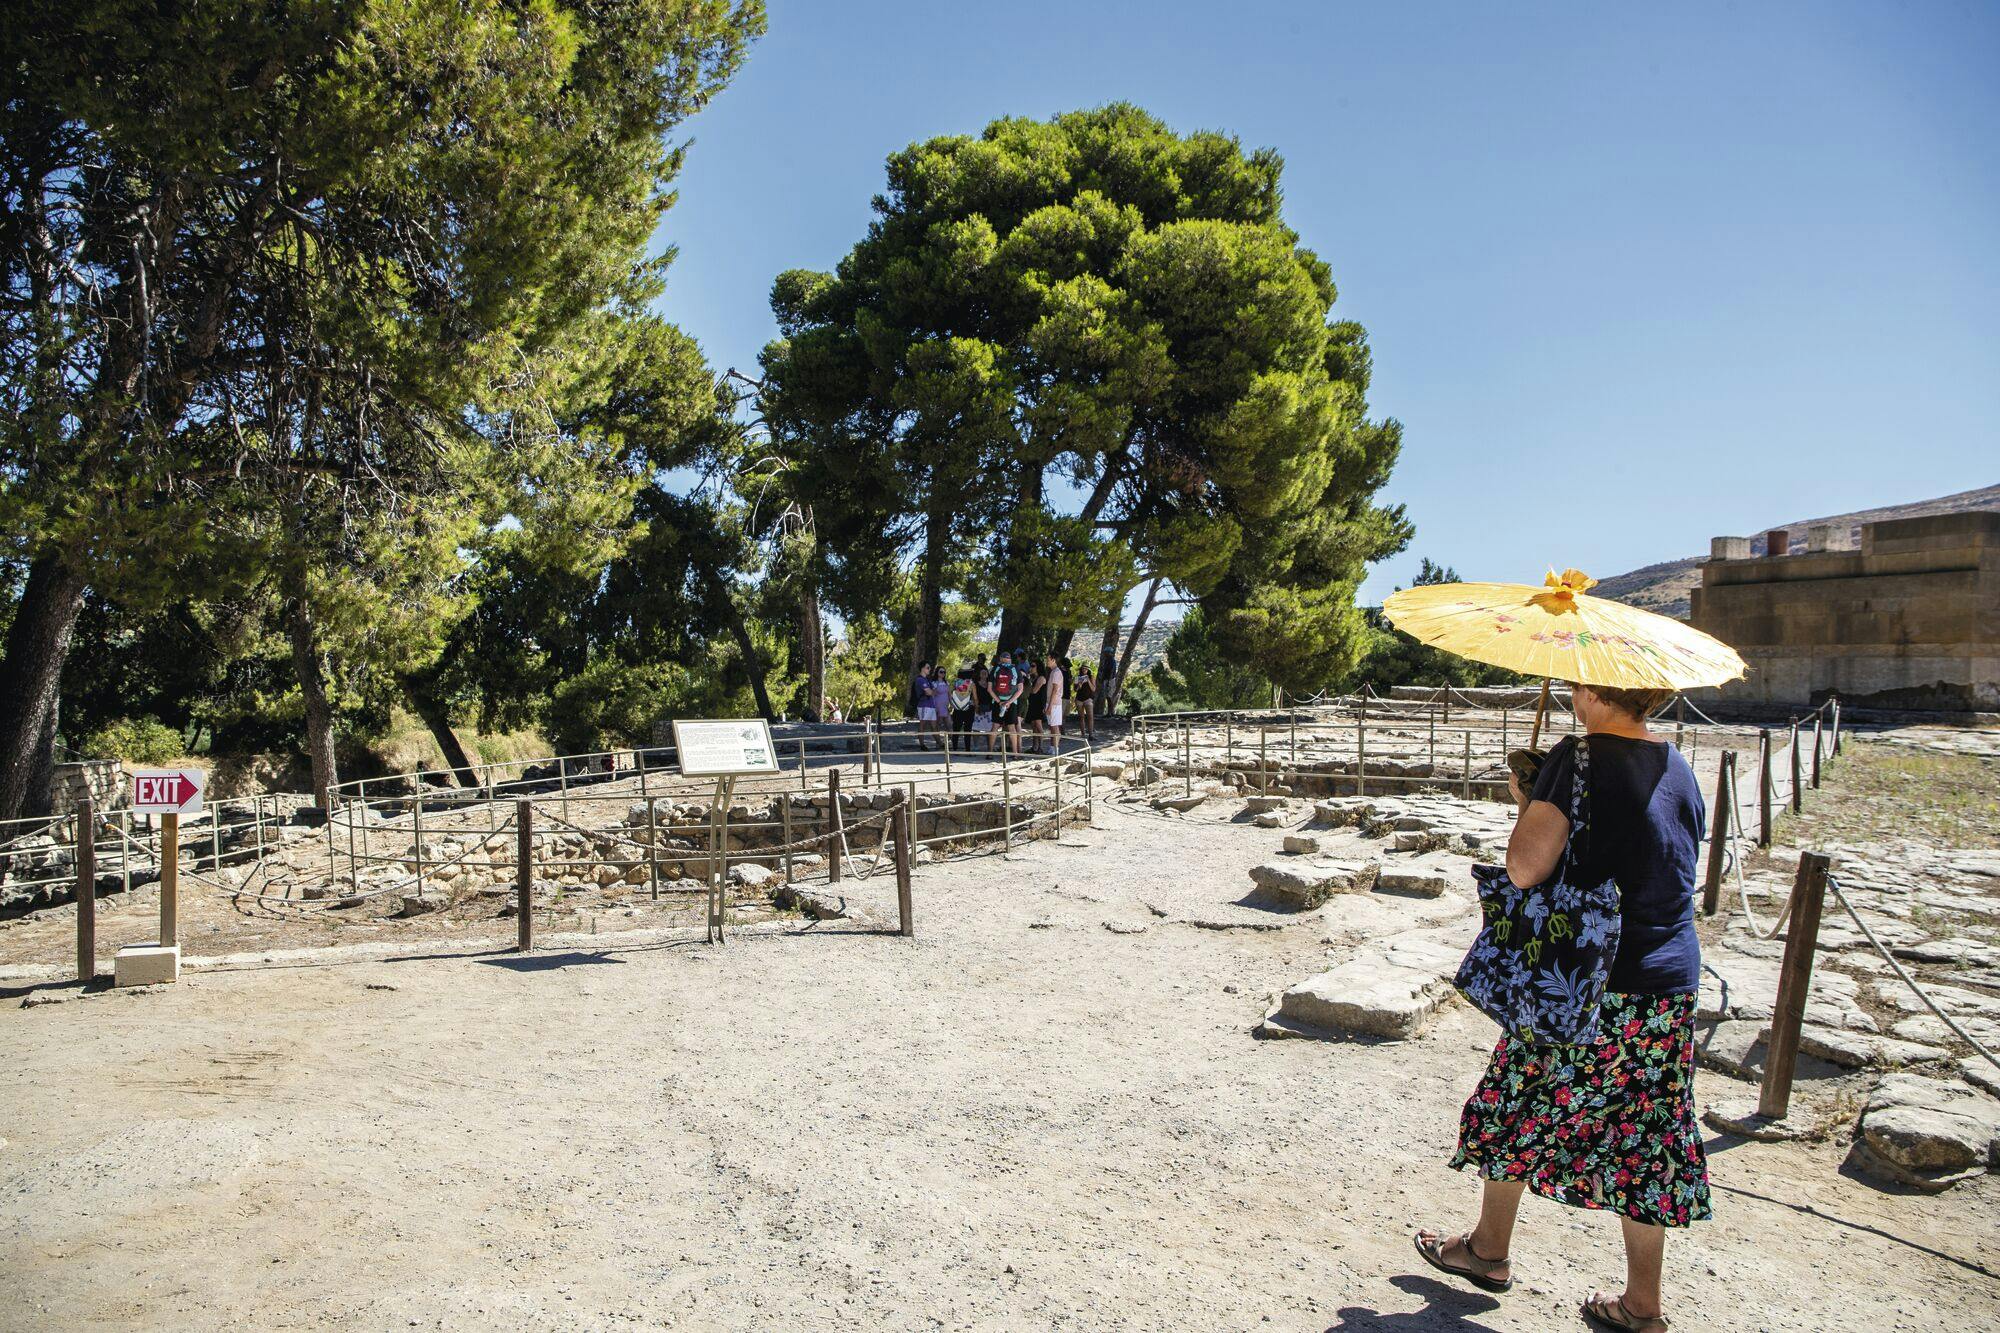 Knossos Tour – from Heraklion